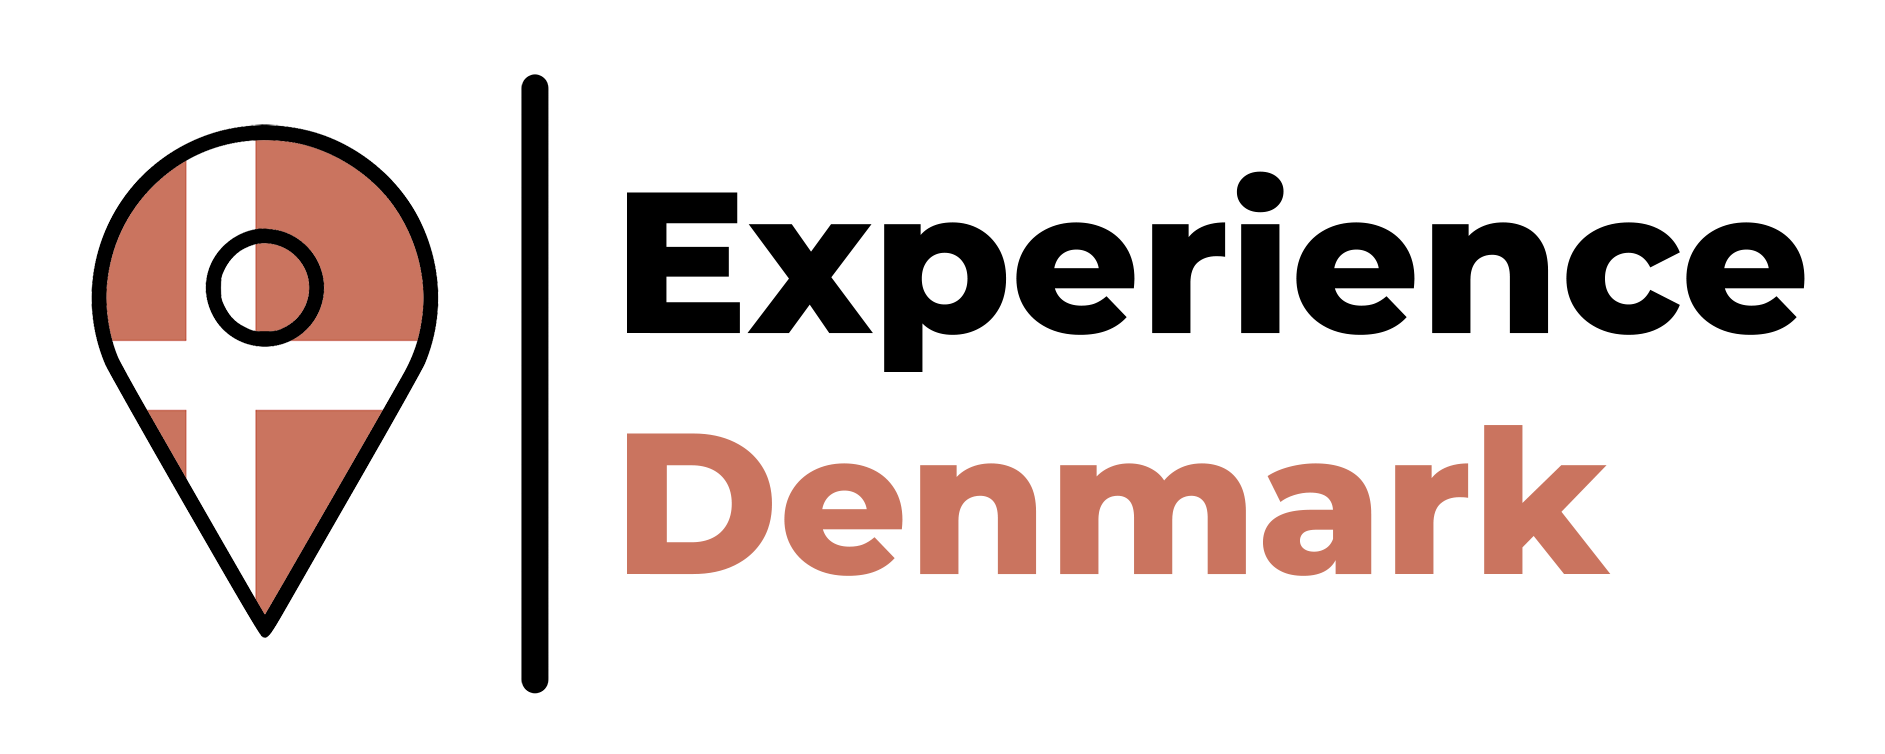 Experience Denmark